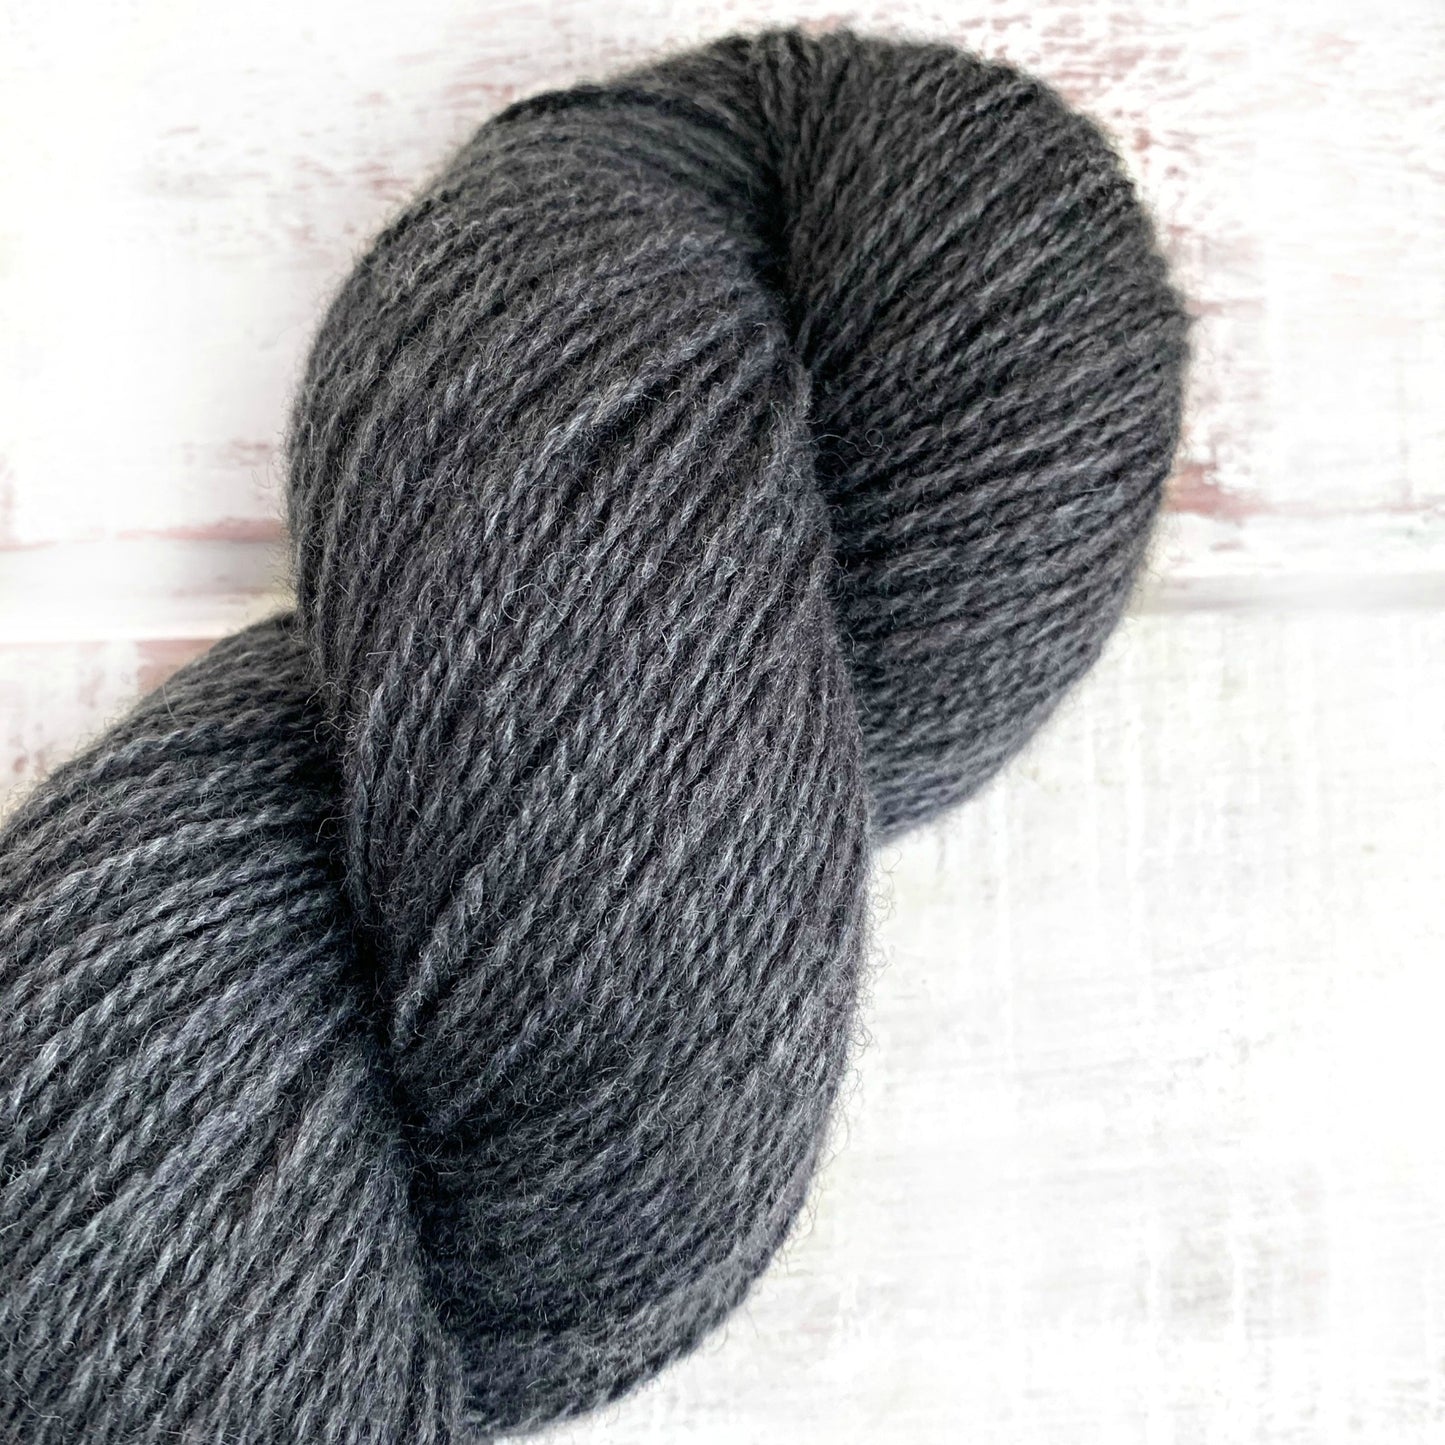 Graphite - Trollfjord sock - Hand Dyed Yarn - Tonal Yarn